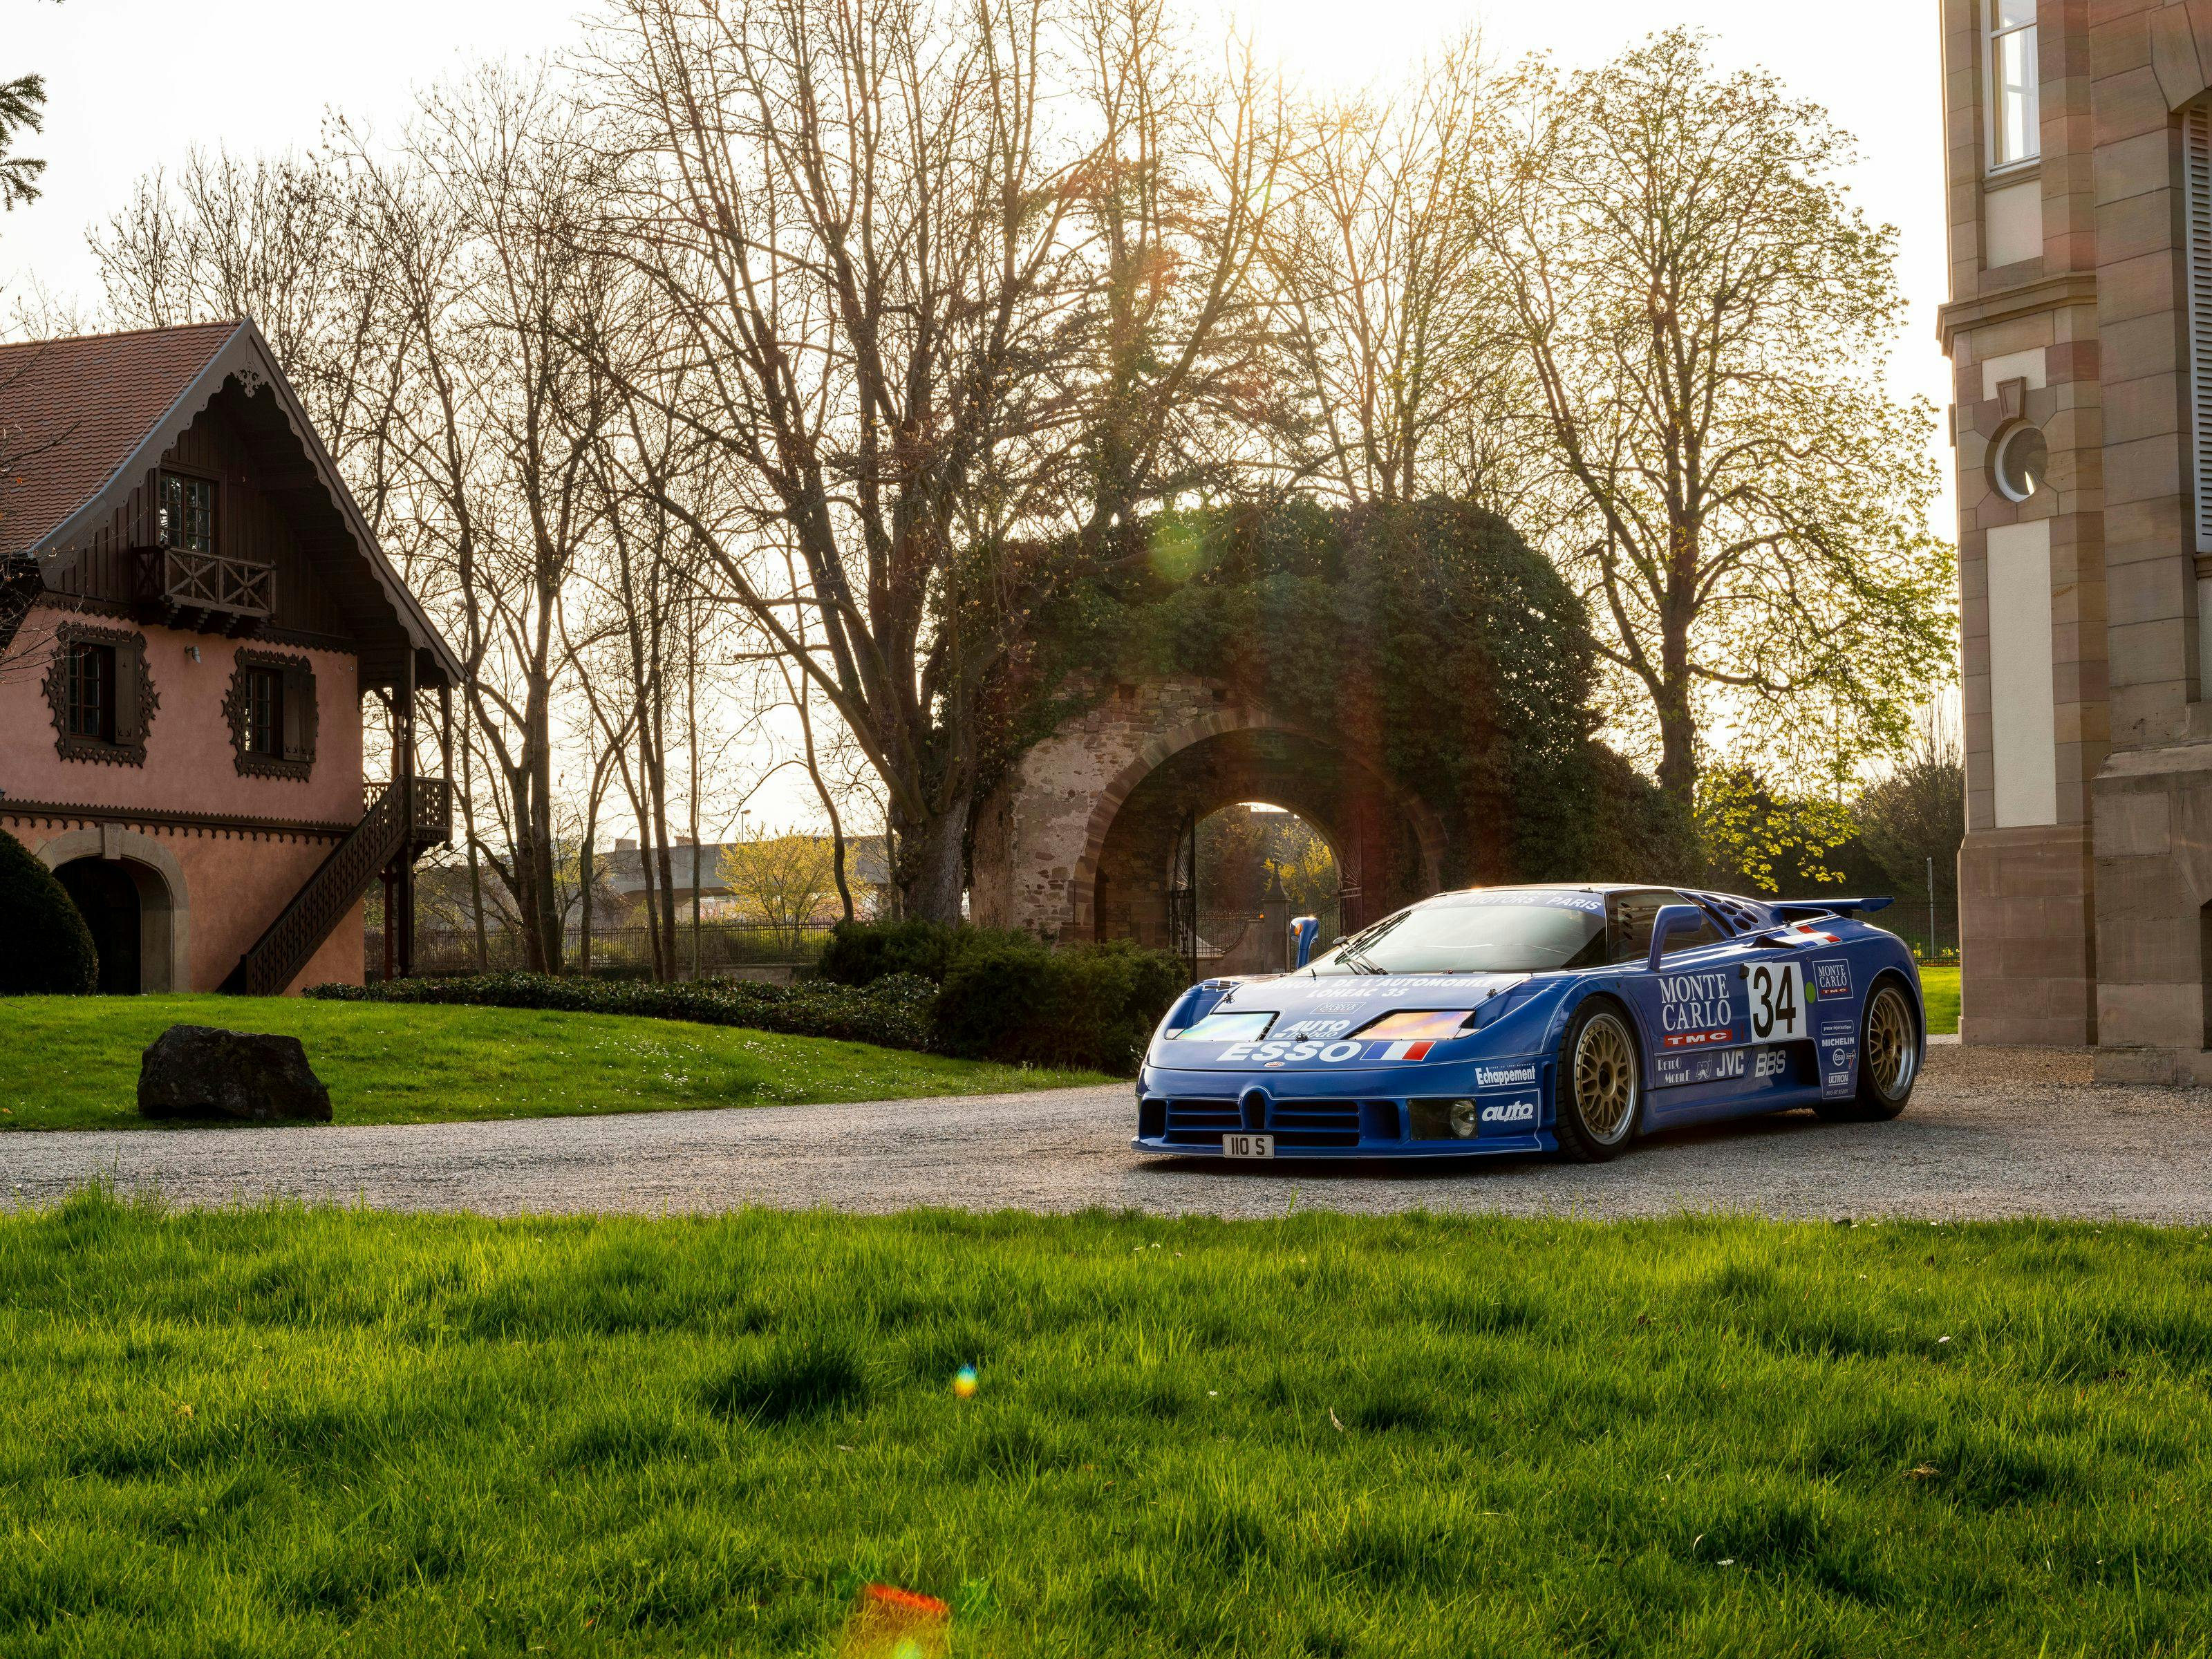 Bugatti Classic Cars – EB110 and Veyron increase in value